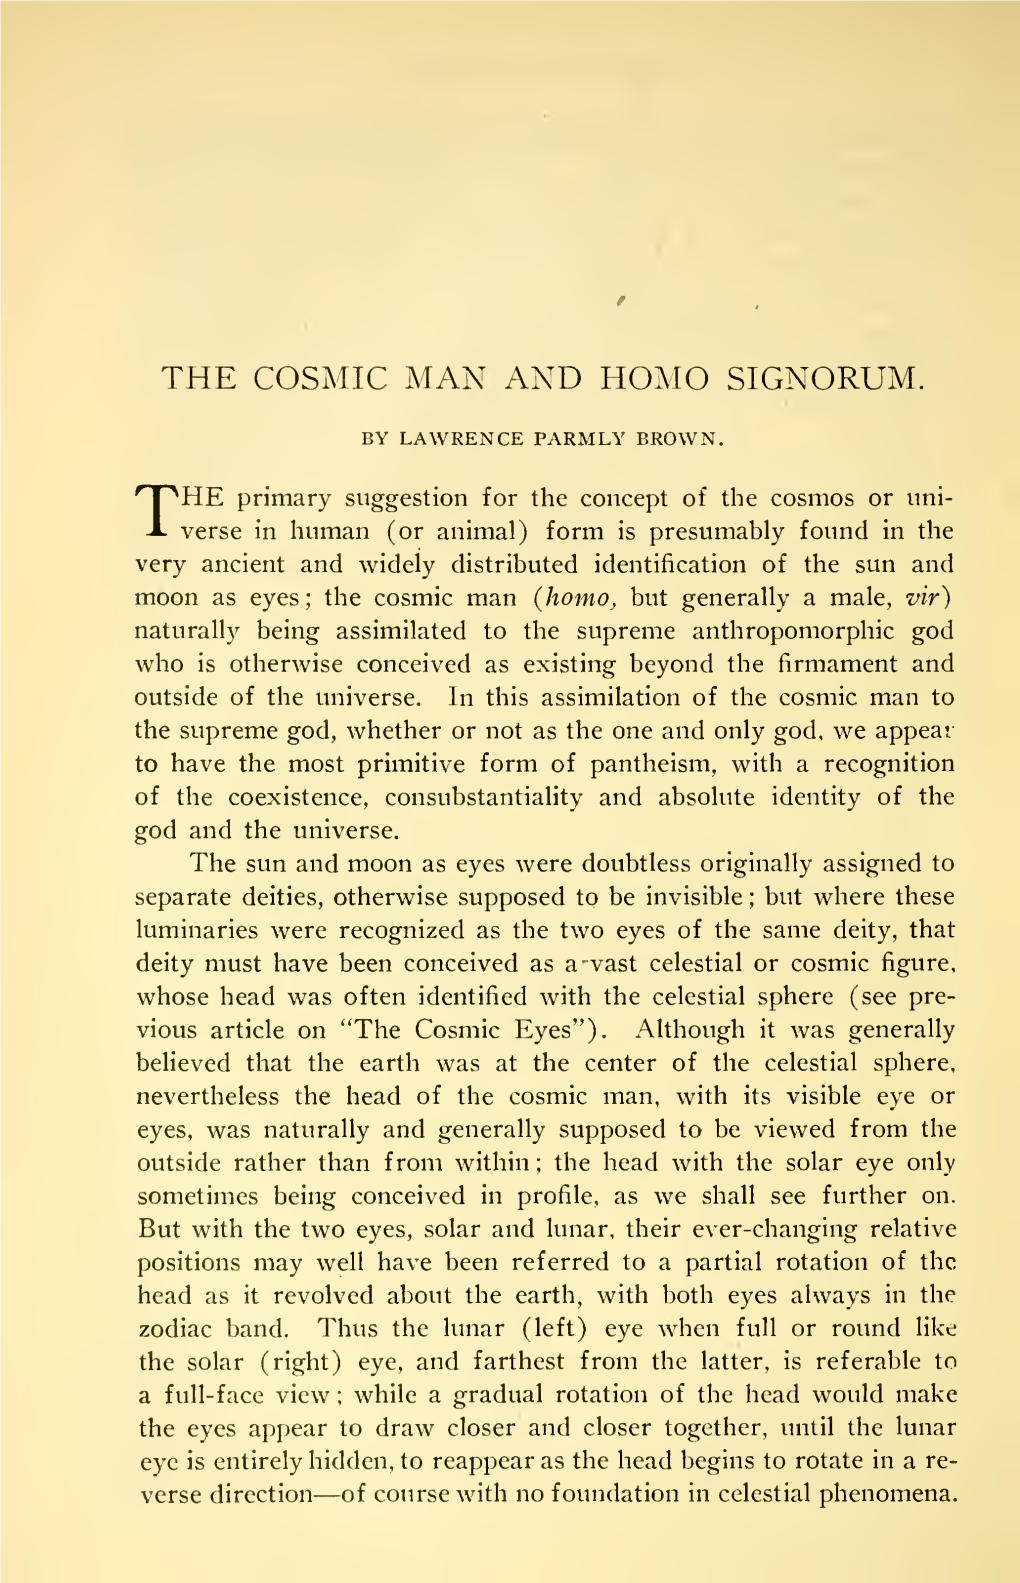 The Cosmic Man and Homo Signorum